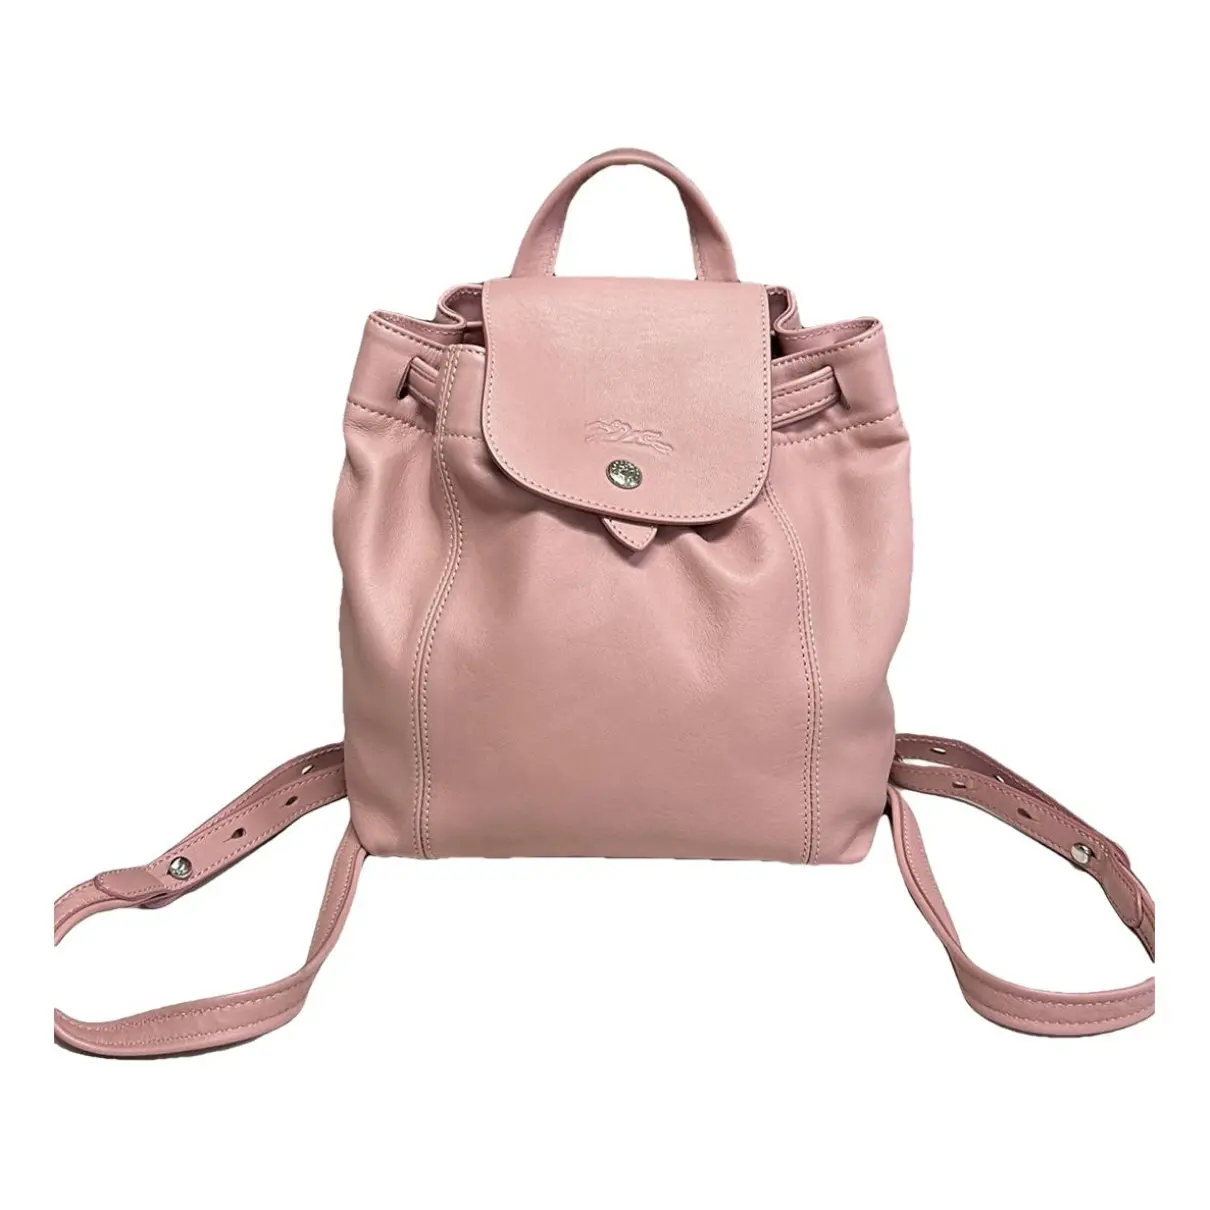 Pliage leather backpack Longchamp